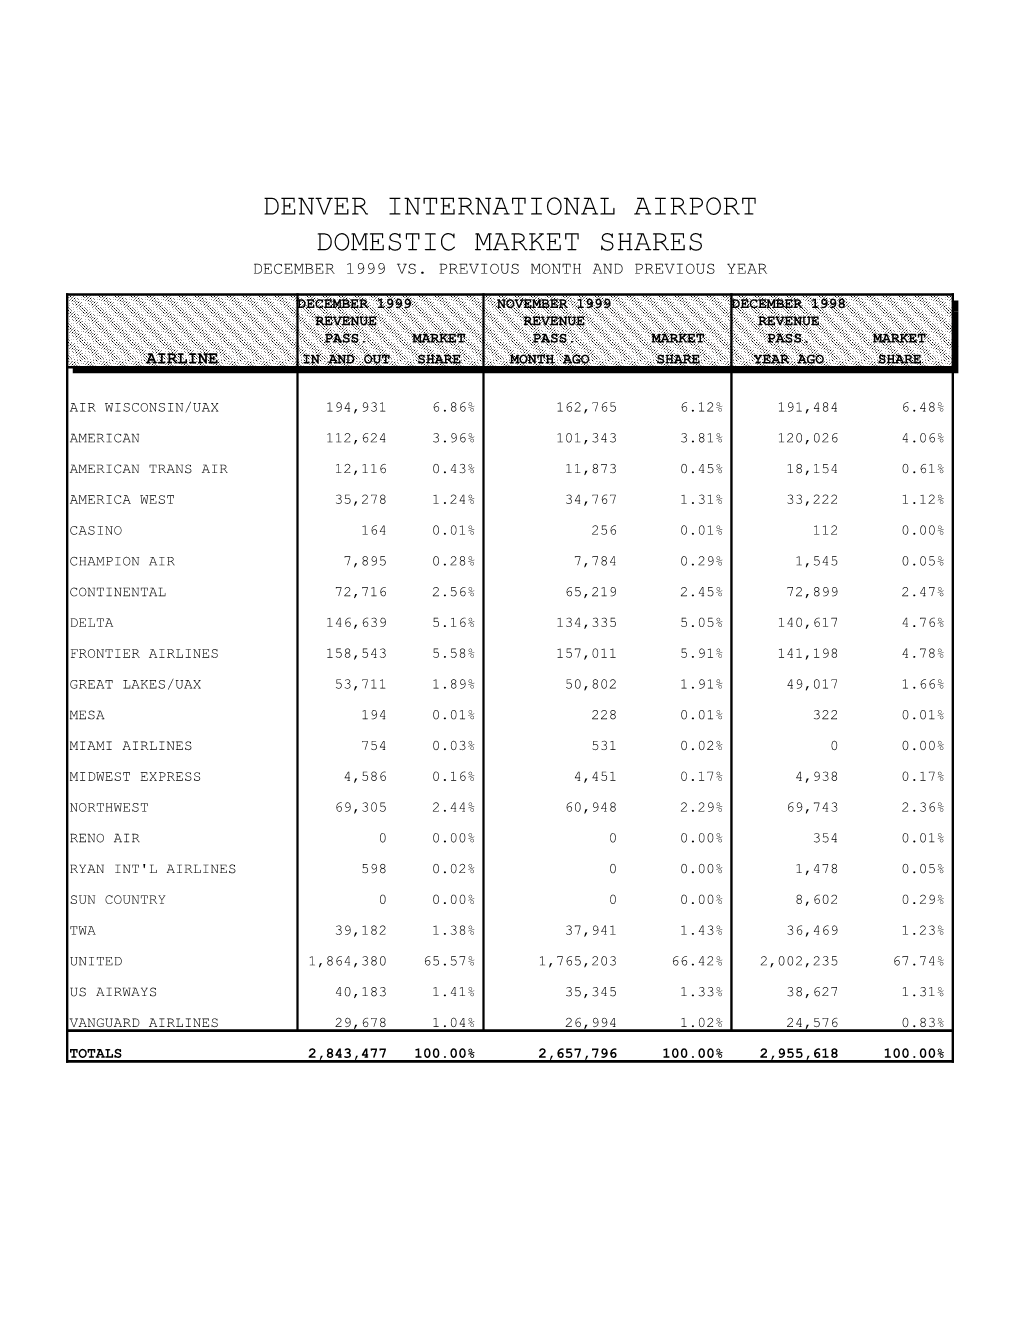 January 2002 Airport Statistics